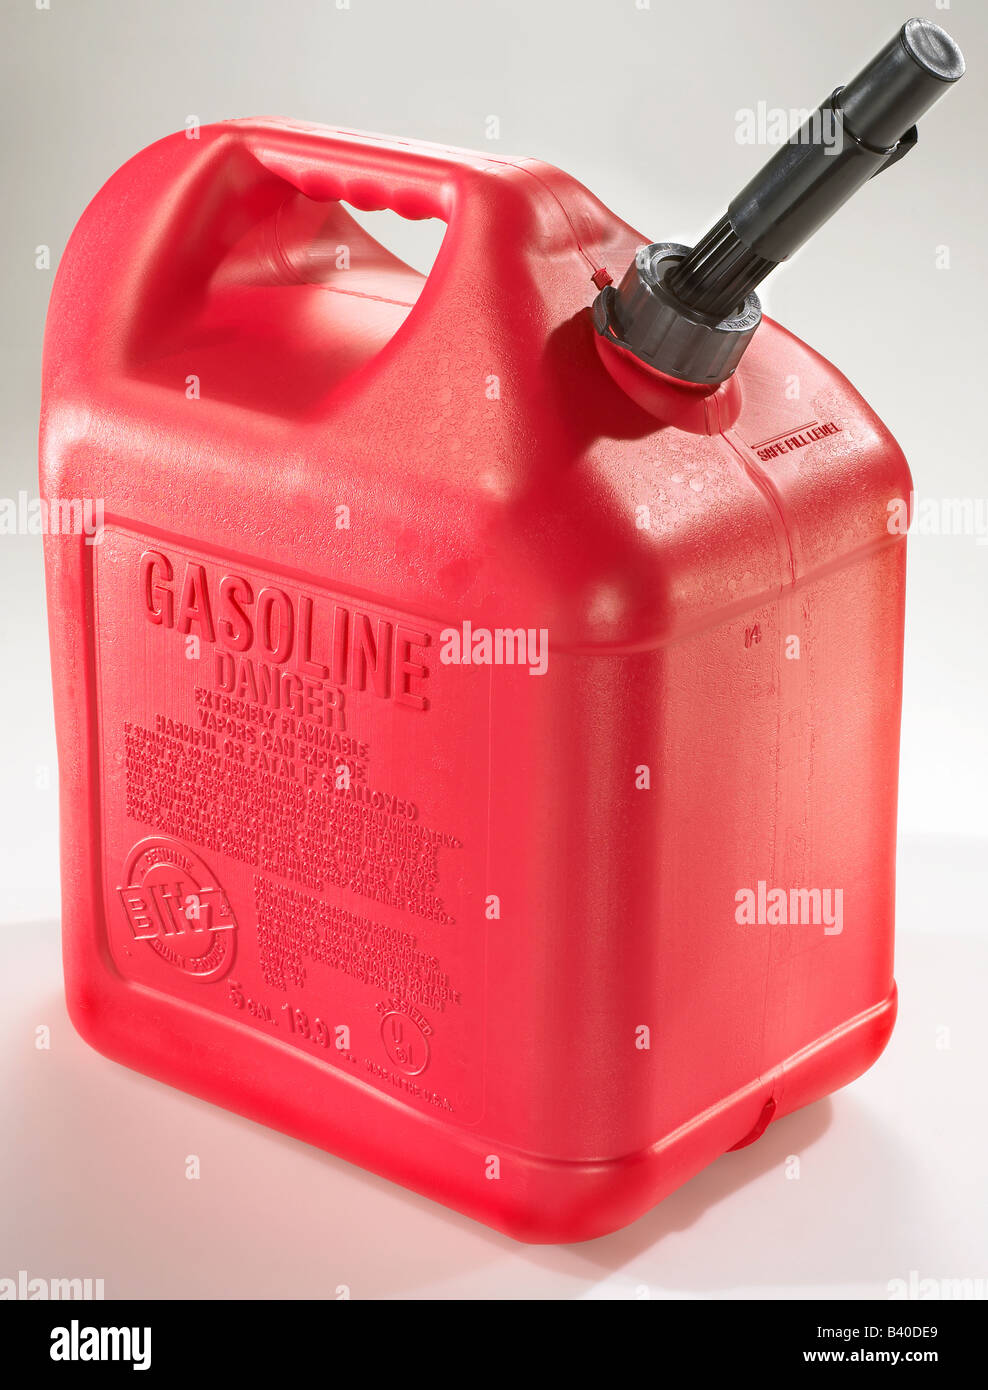 Portable gasoline can Stock Photo